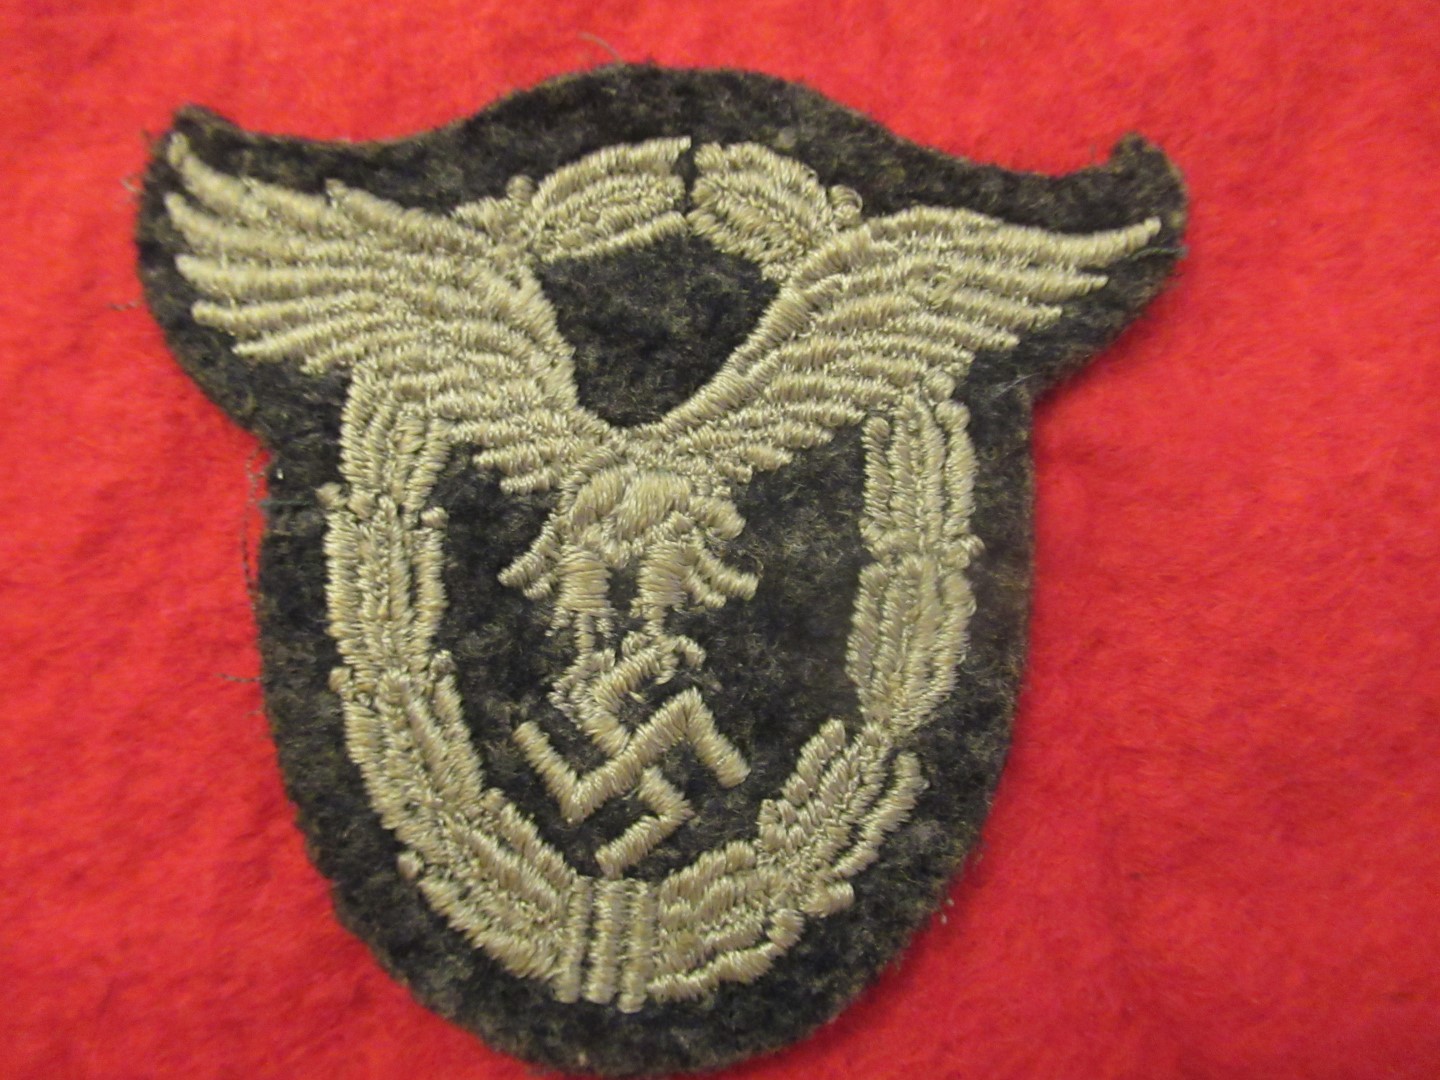 LW pilot badge in cloth